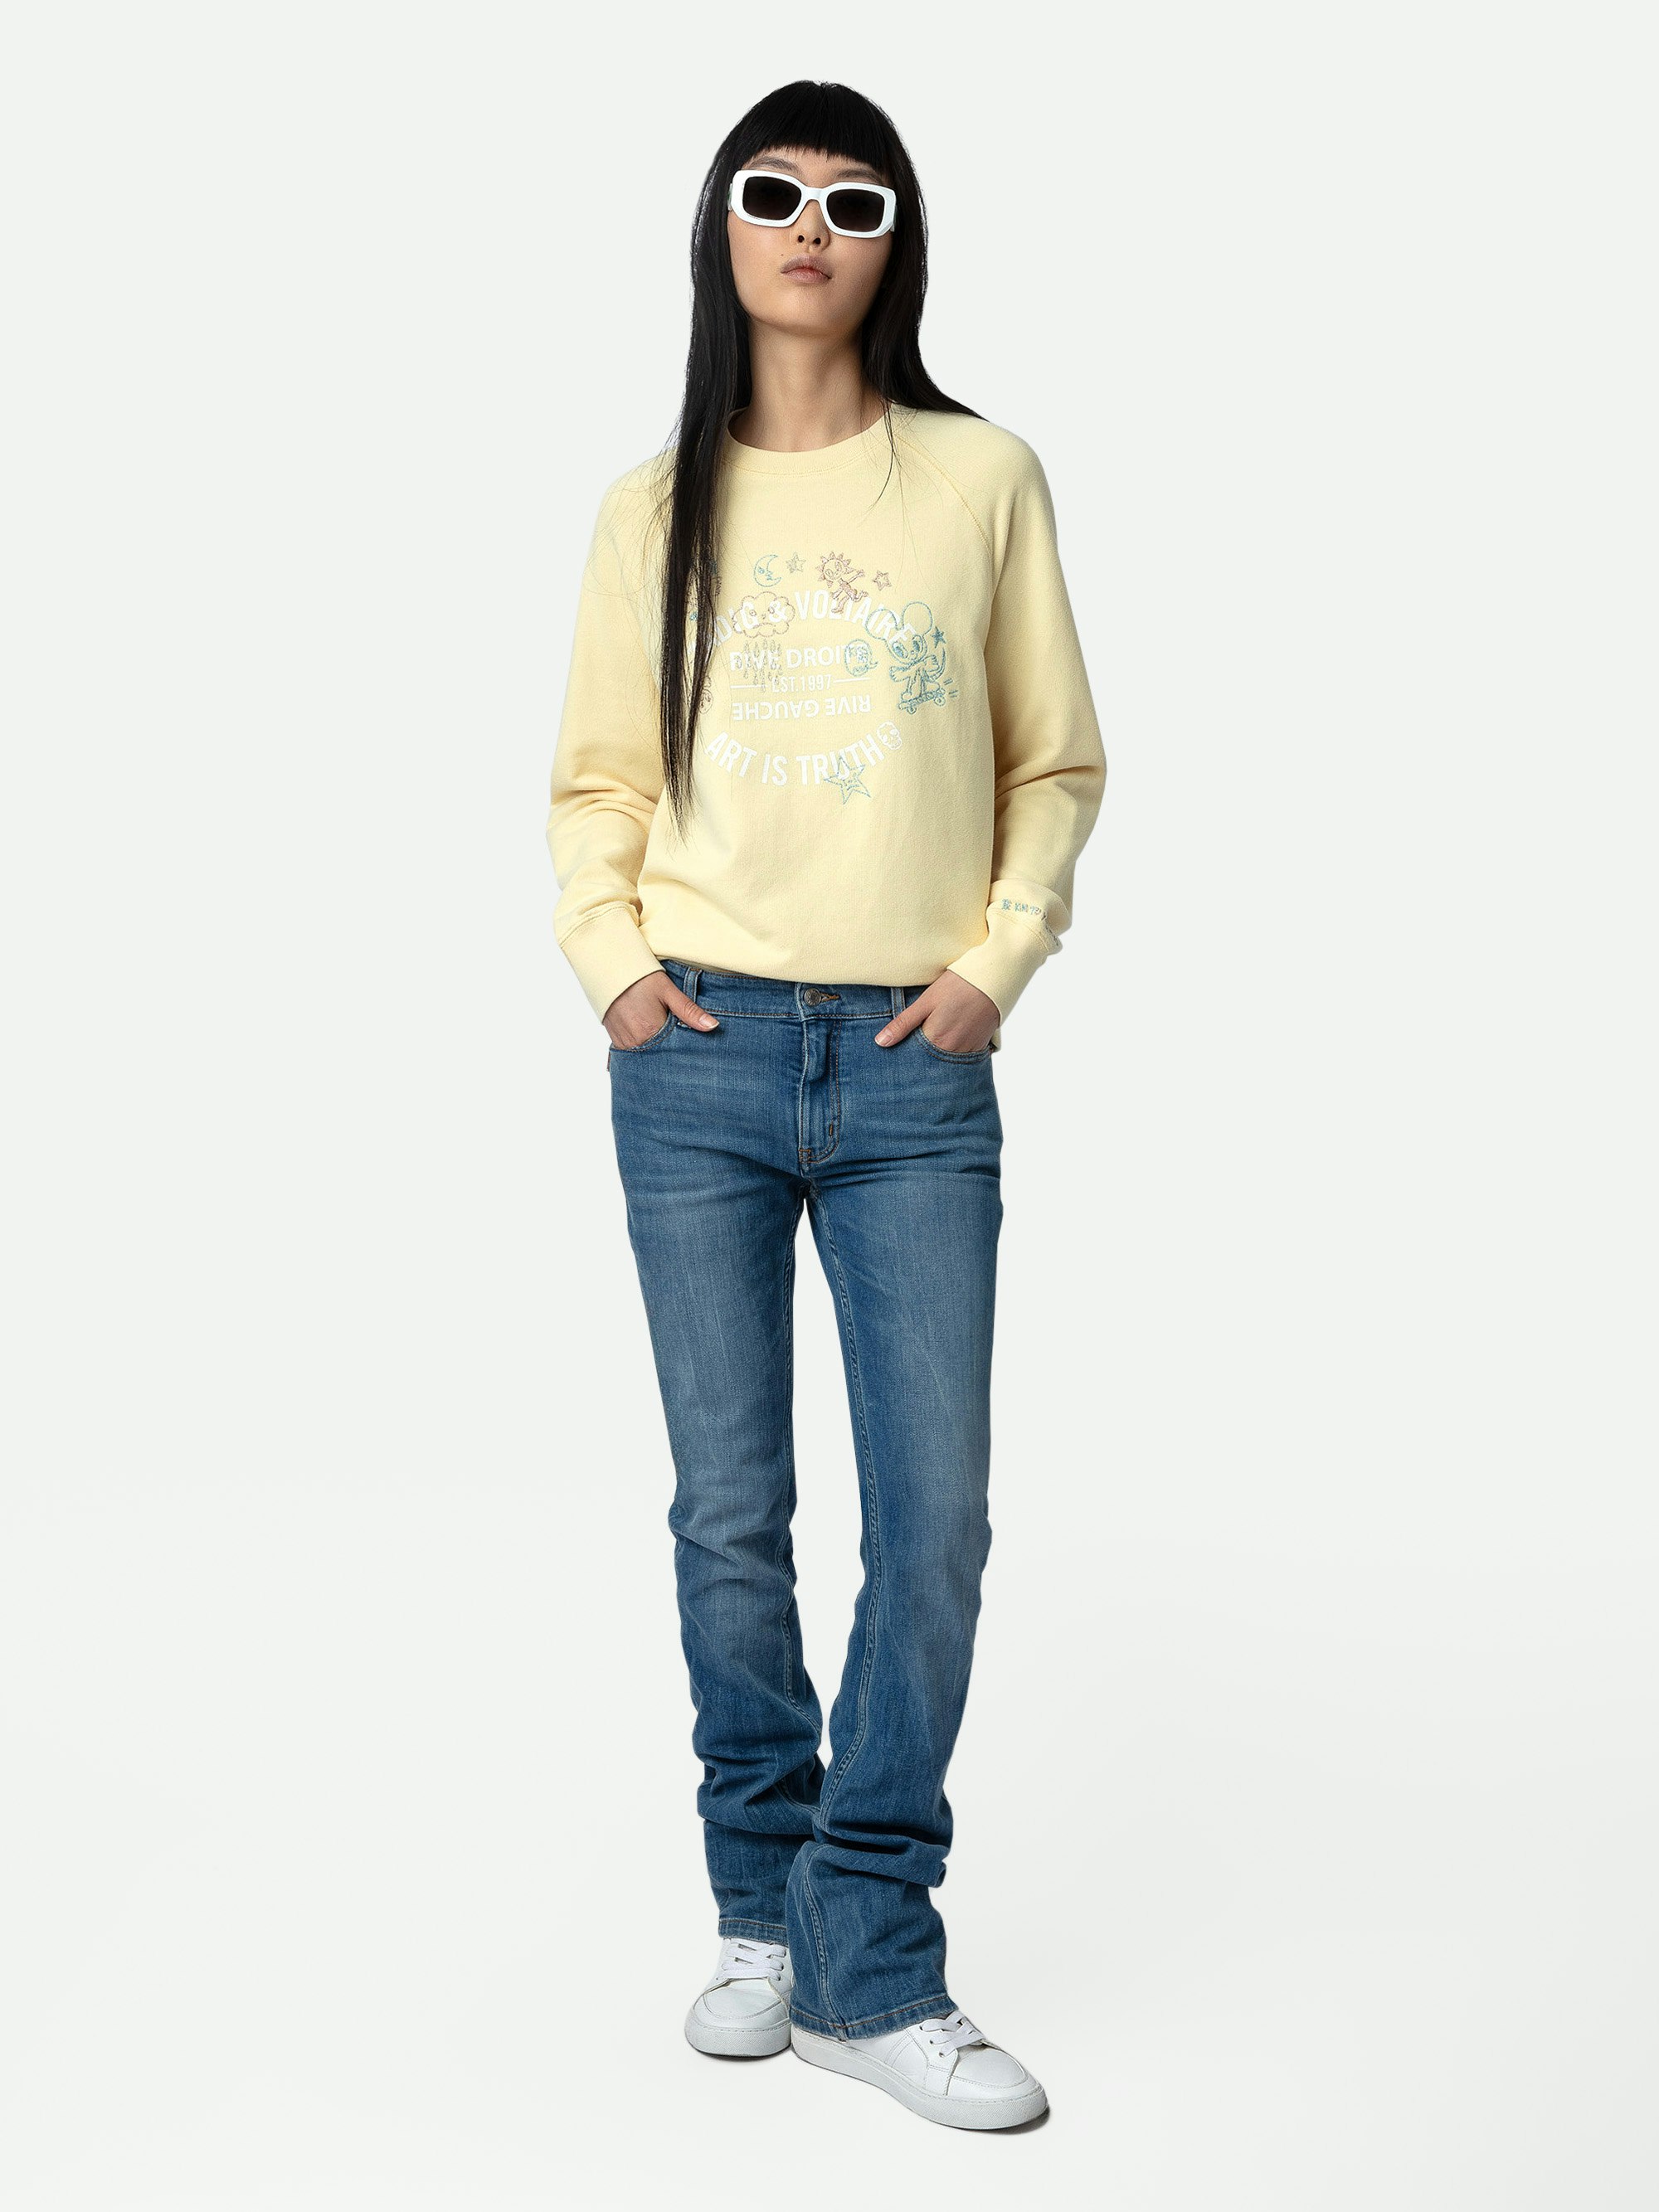 Sweatshirt Upper Blason - Sweatshirt jaune clair à manches longues, blason et customisations créées par Humberto Cruz.